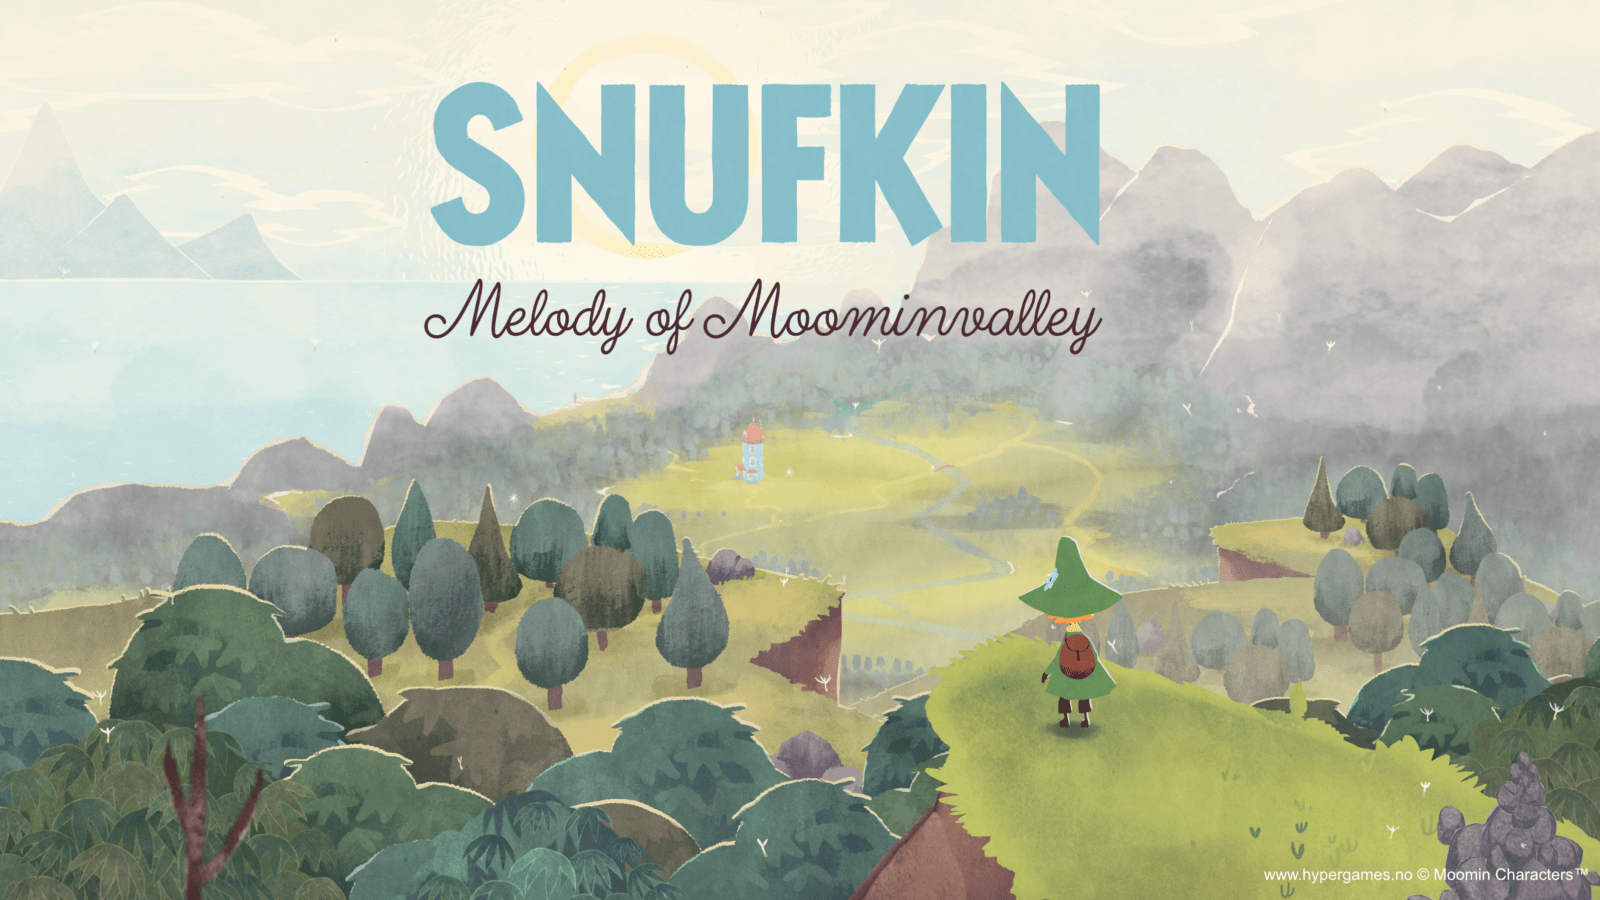 Snufkin: Melody of Moominvalley: aventura baseada no clássico desenho chega ao Switch em 2023